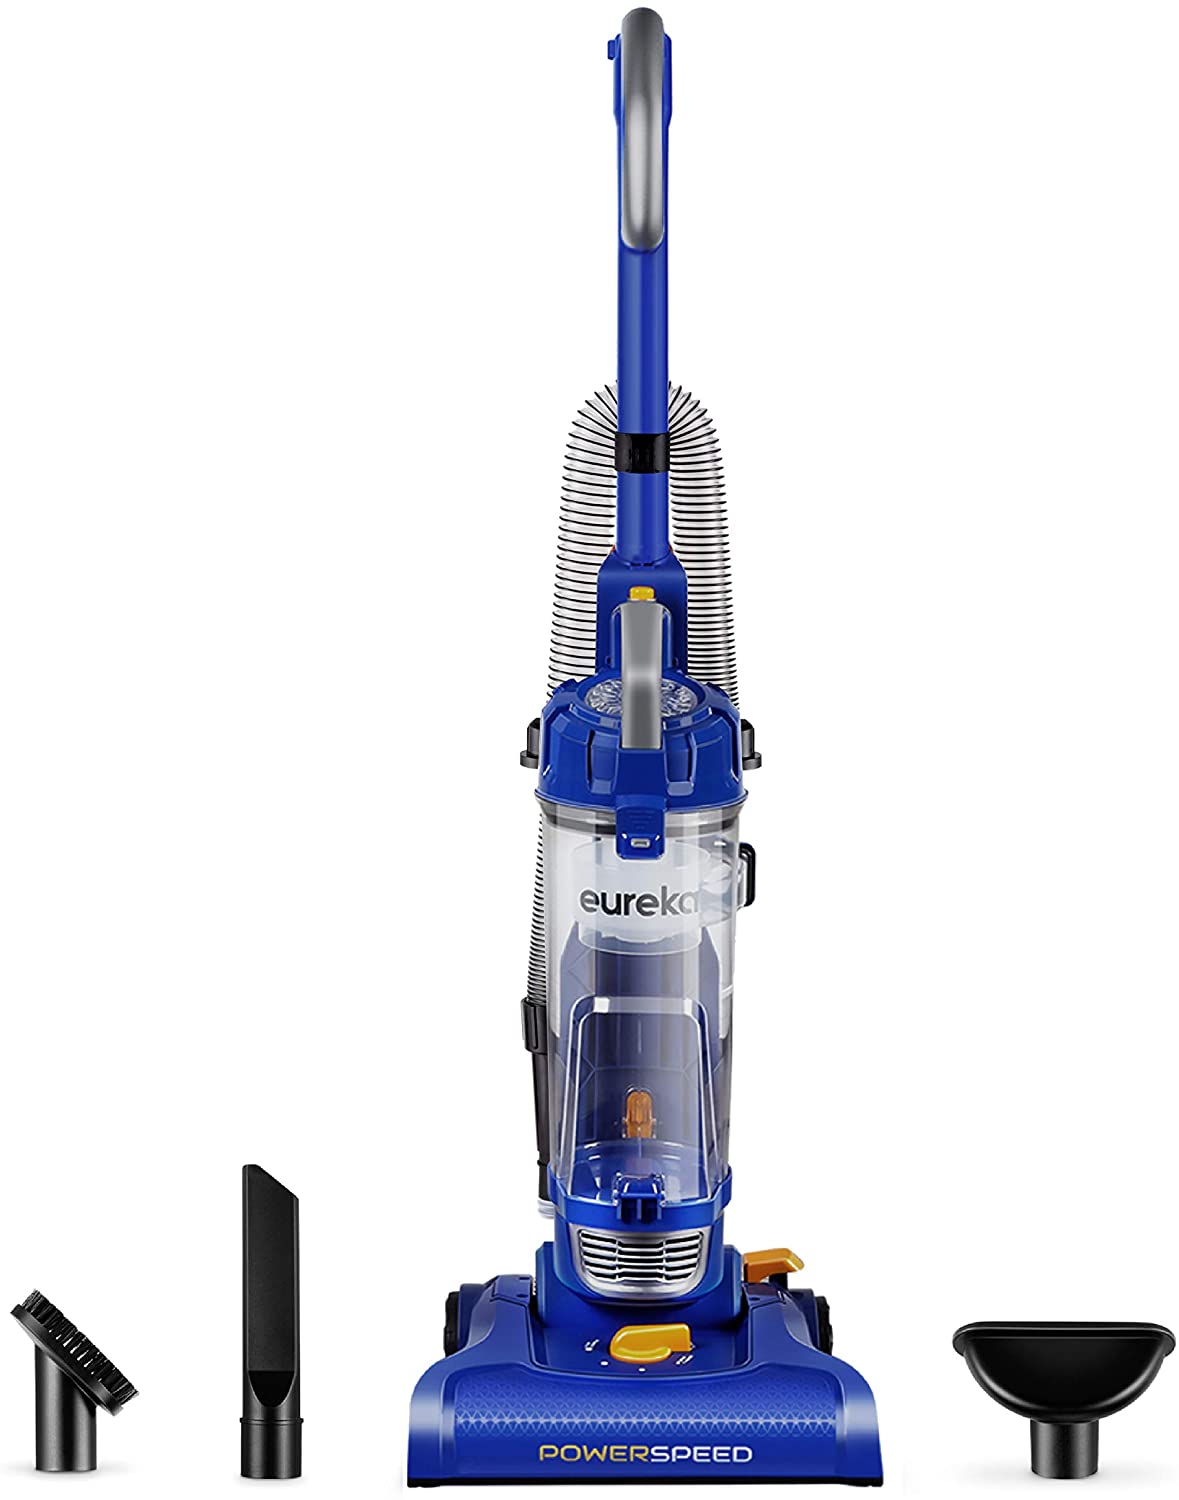 Eureka NEU182A PowerSpeed Lightweight Bagless Upright Vacuum Cleaner